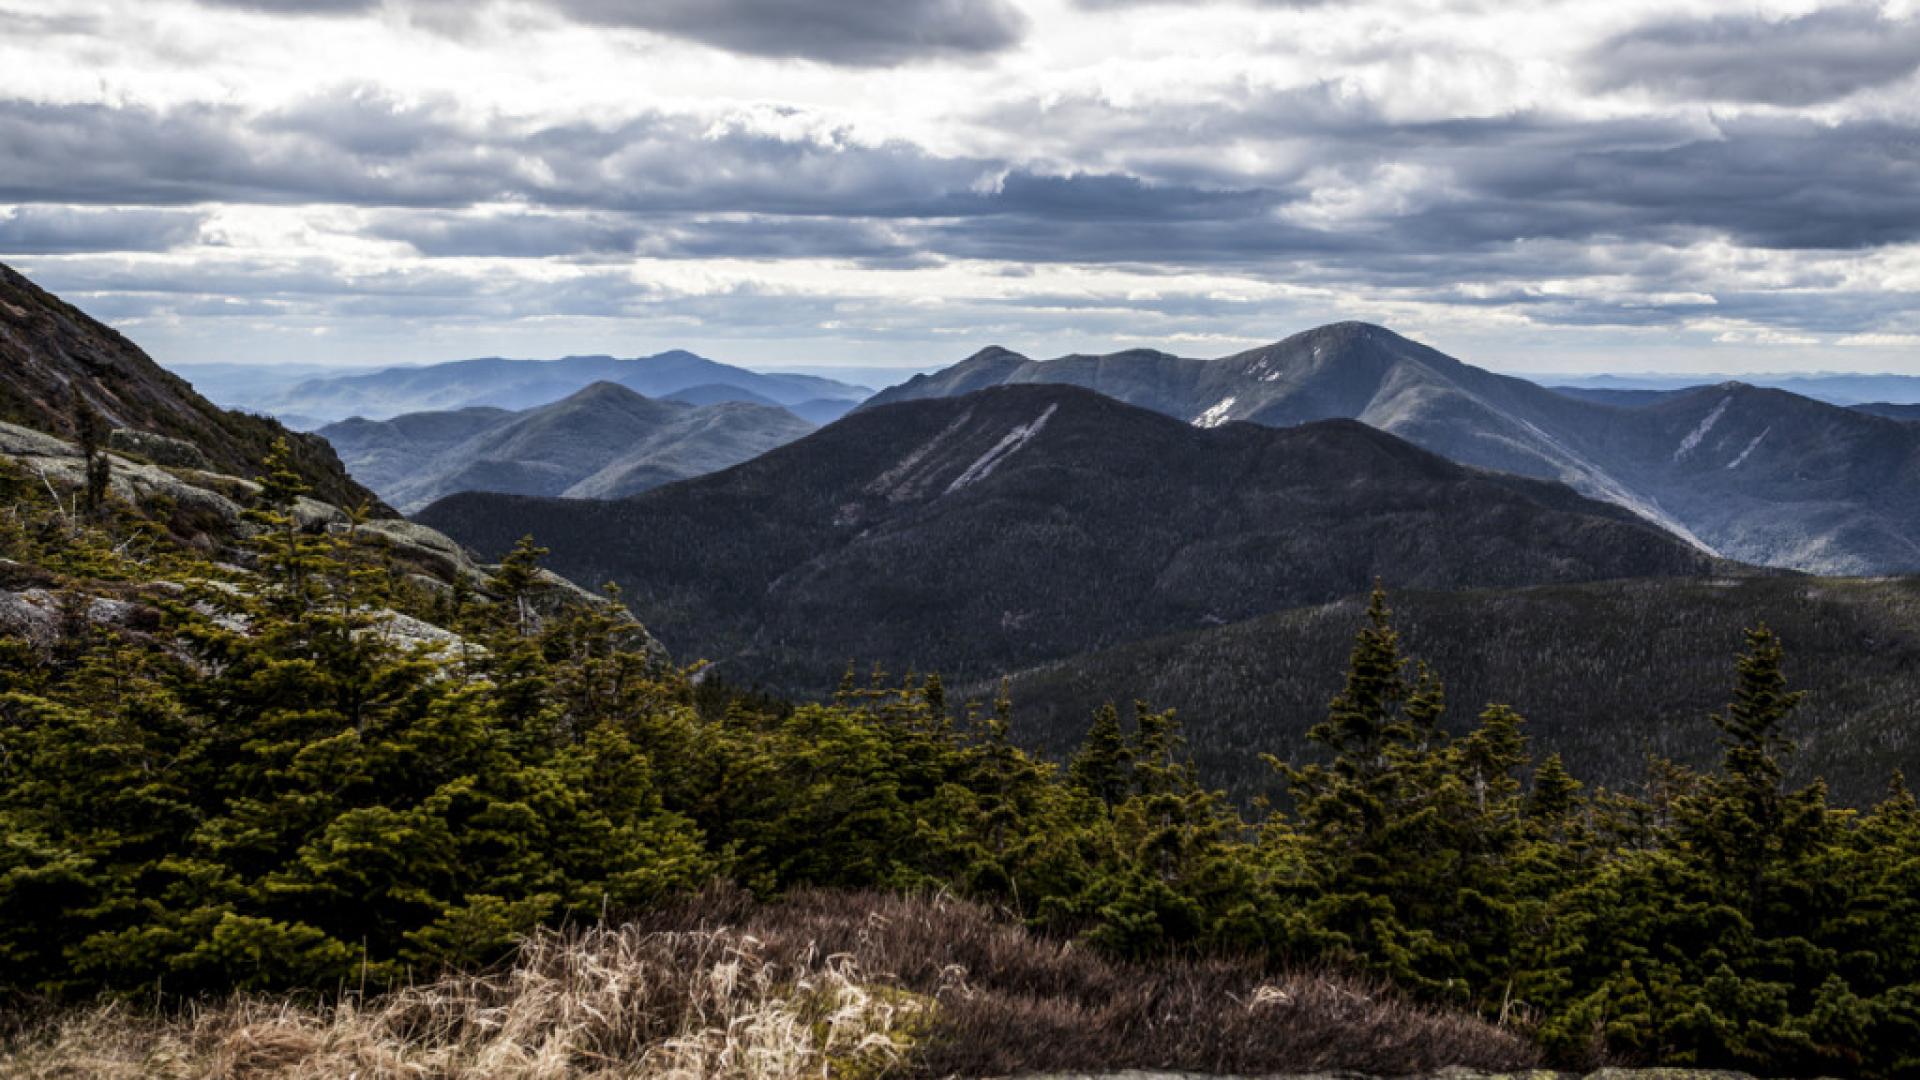 Adirondack High Peaks Wilderness Area